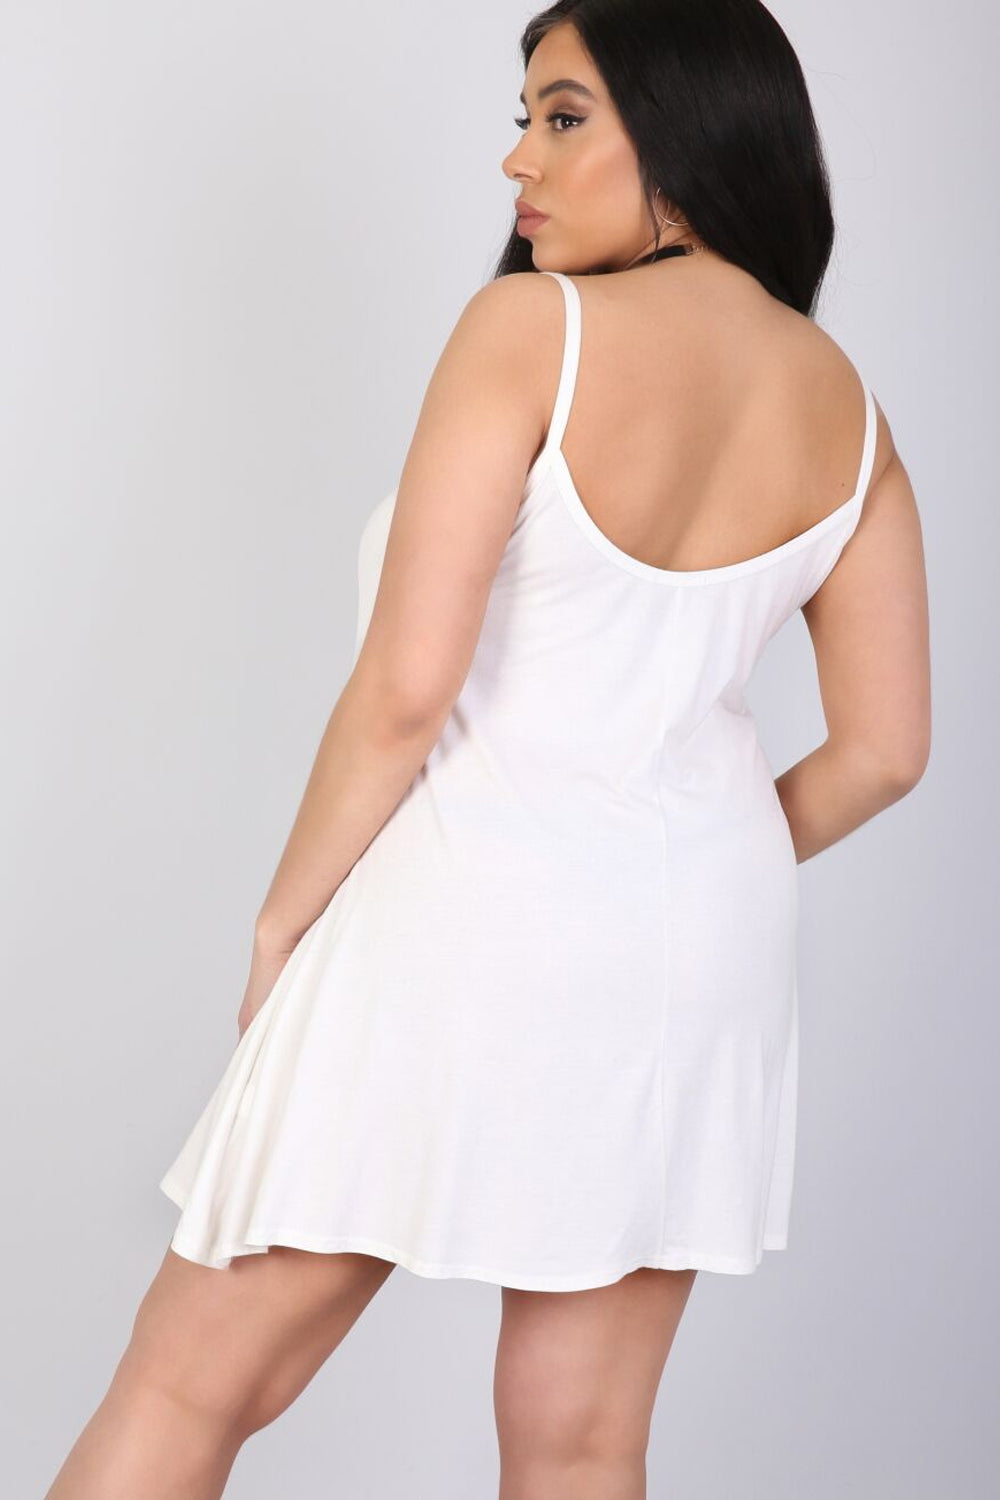 Strappy Basic Jersey White Mini Swing Dress - bejealous-com